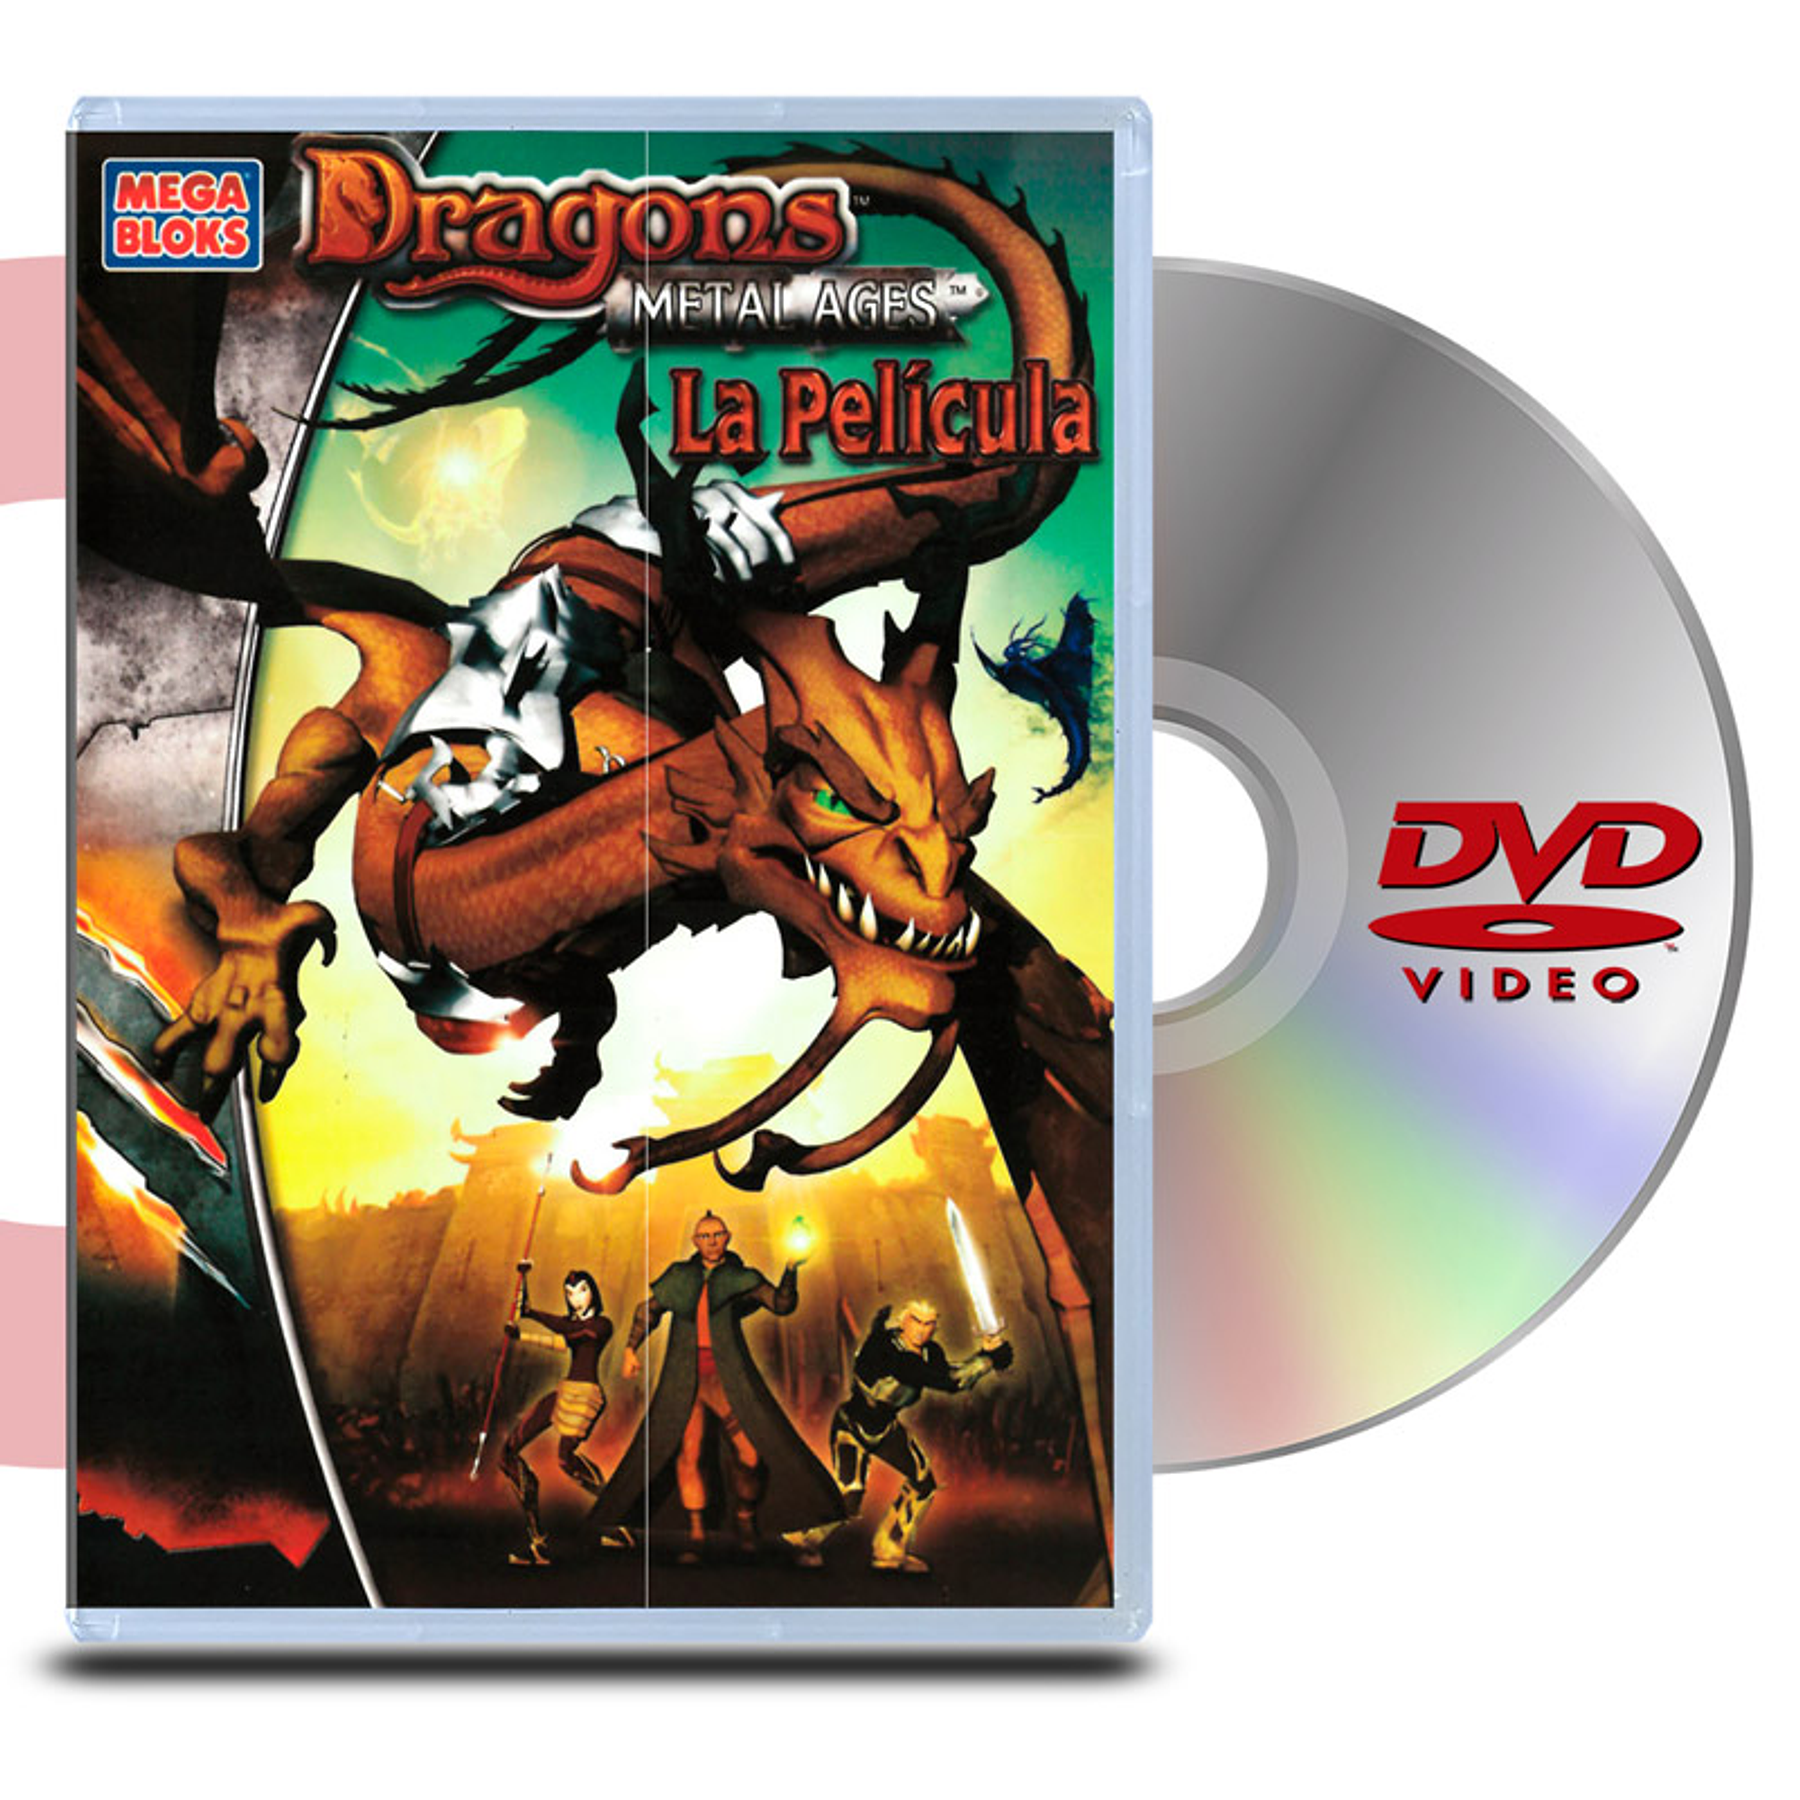 DVD DRAGONS: METAL AGES